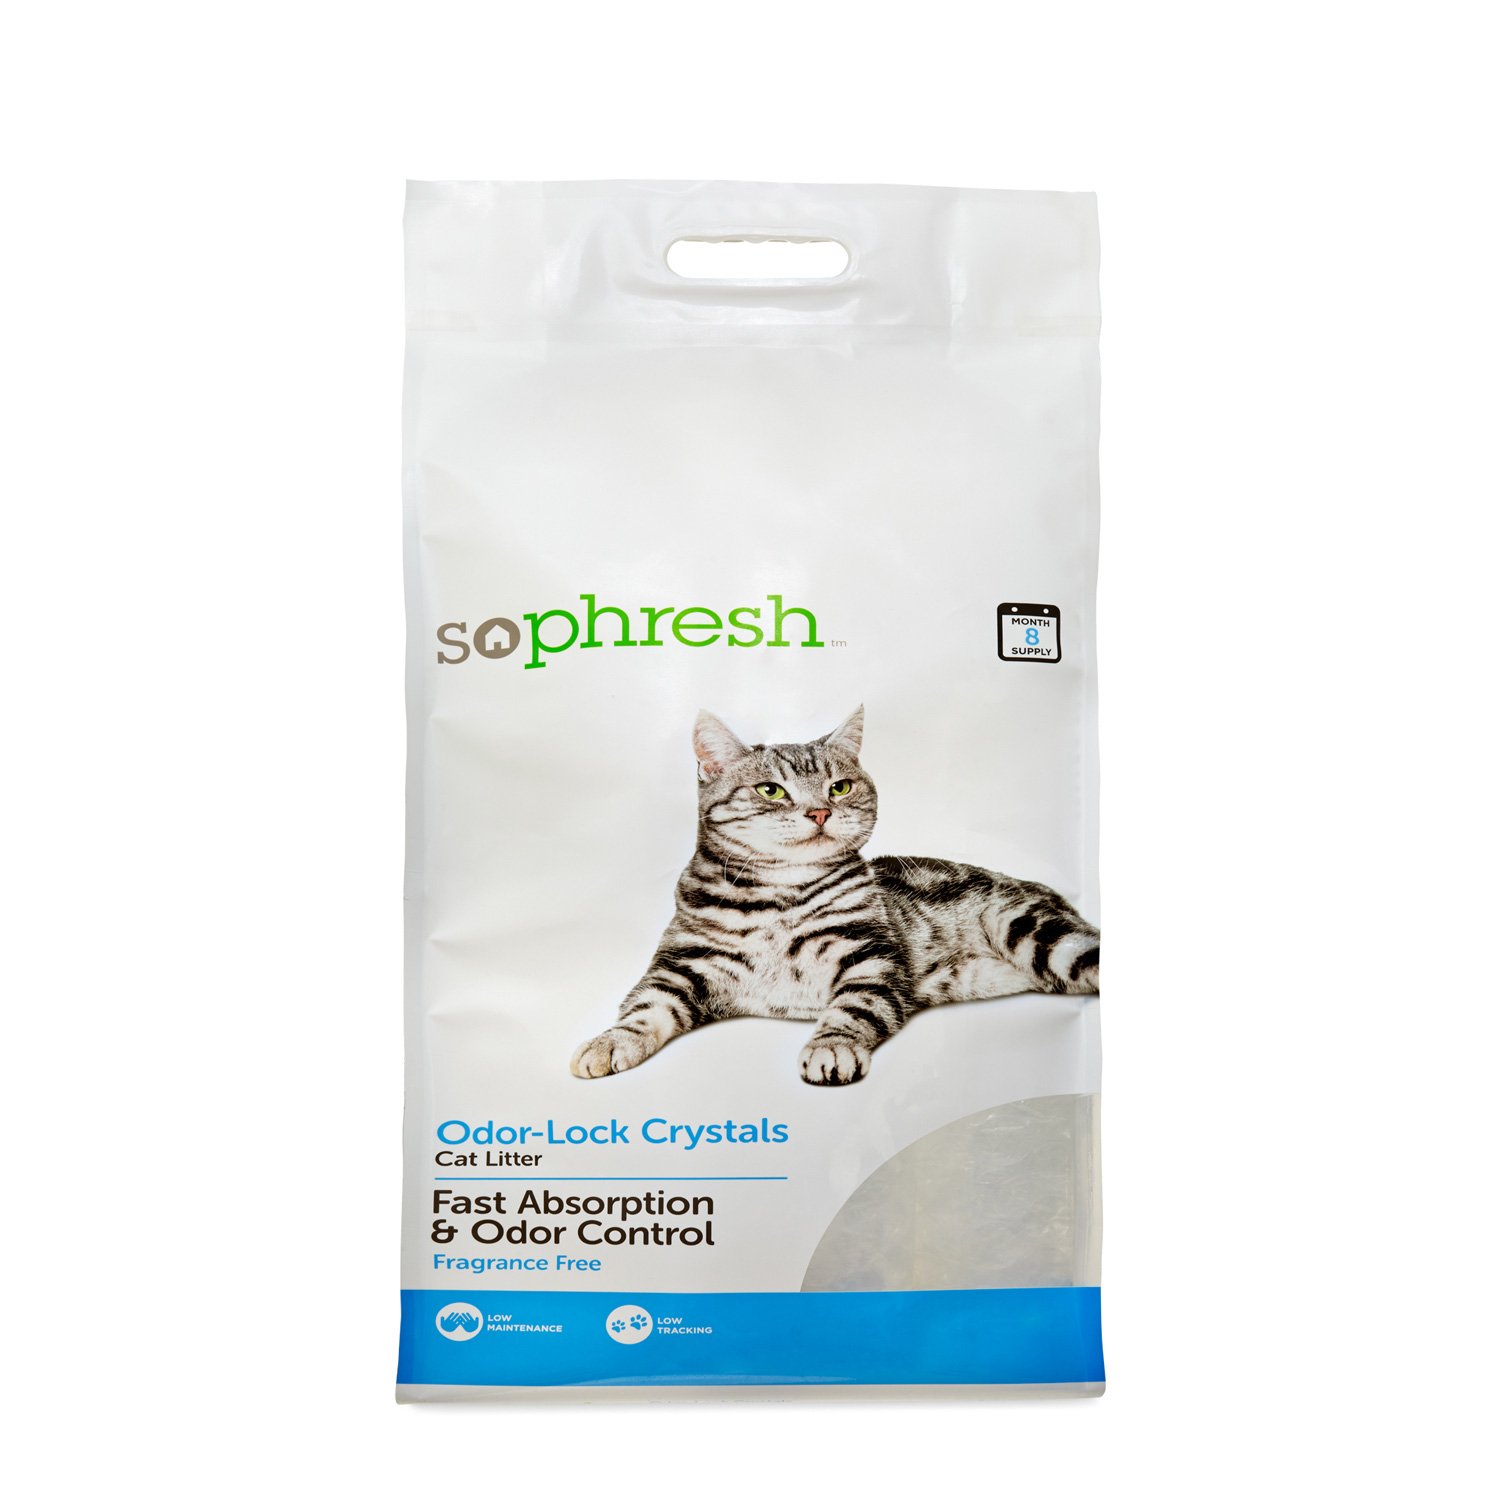 So Phresh OdorLock Crystal Cat Litter Petco